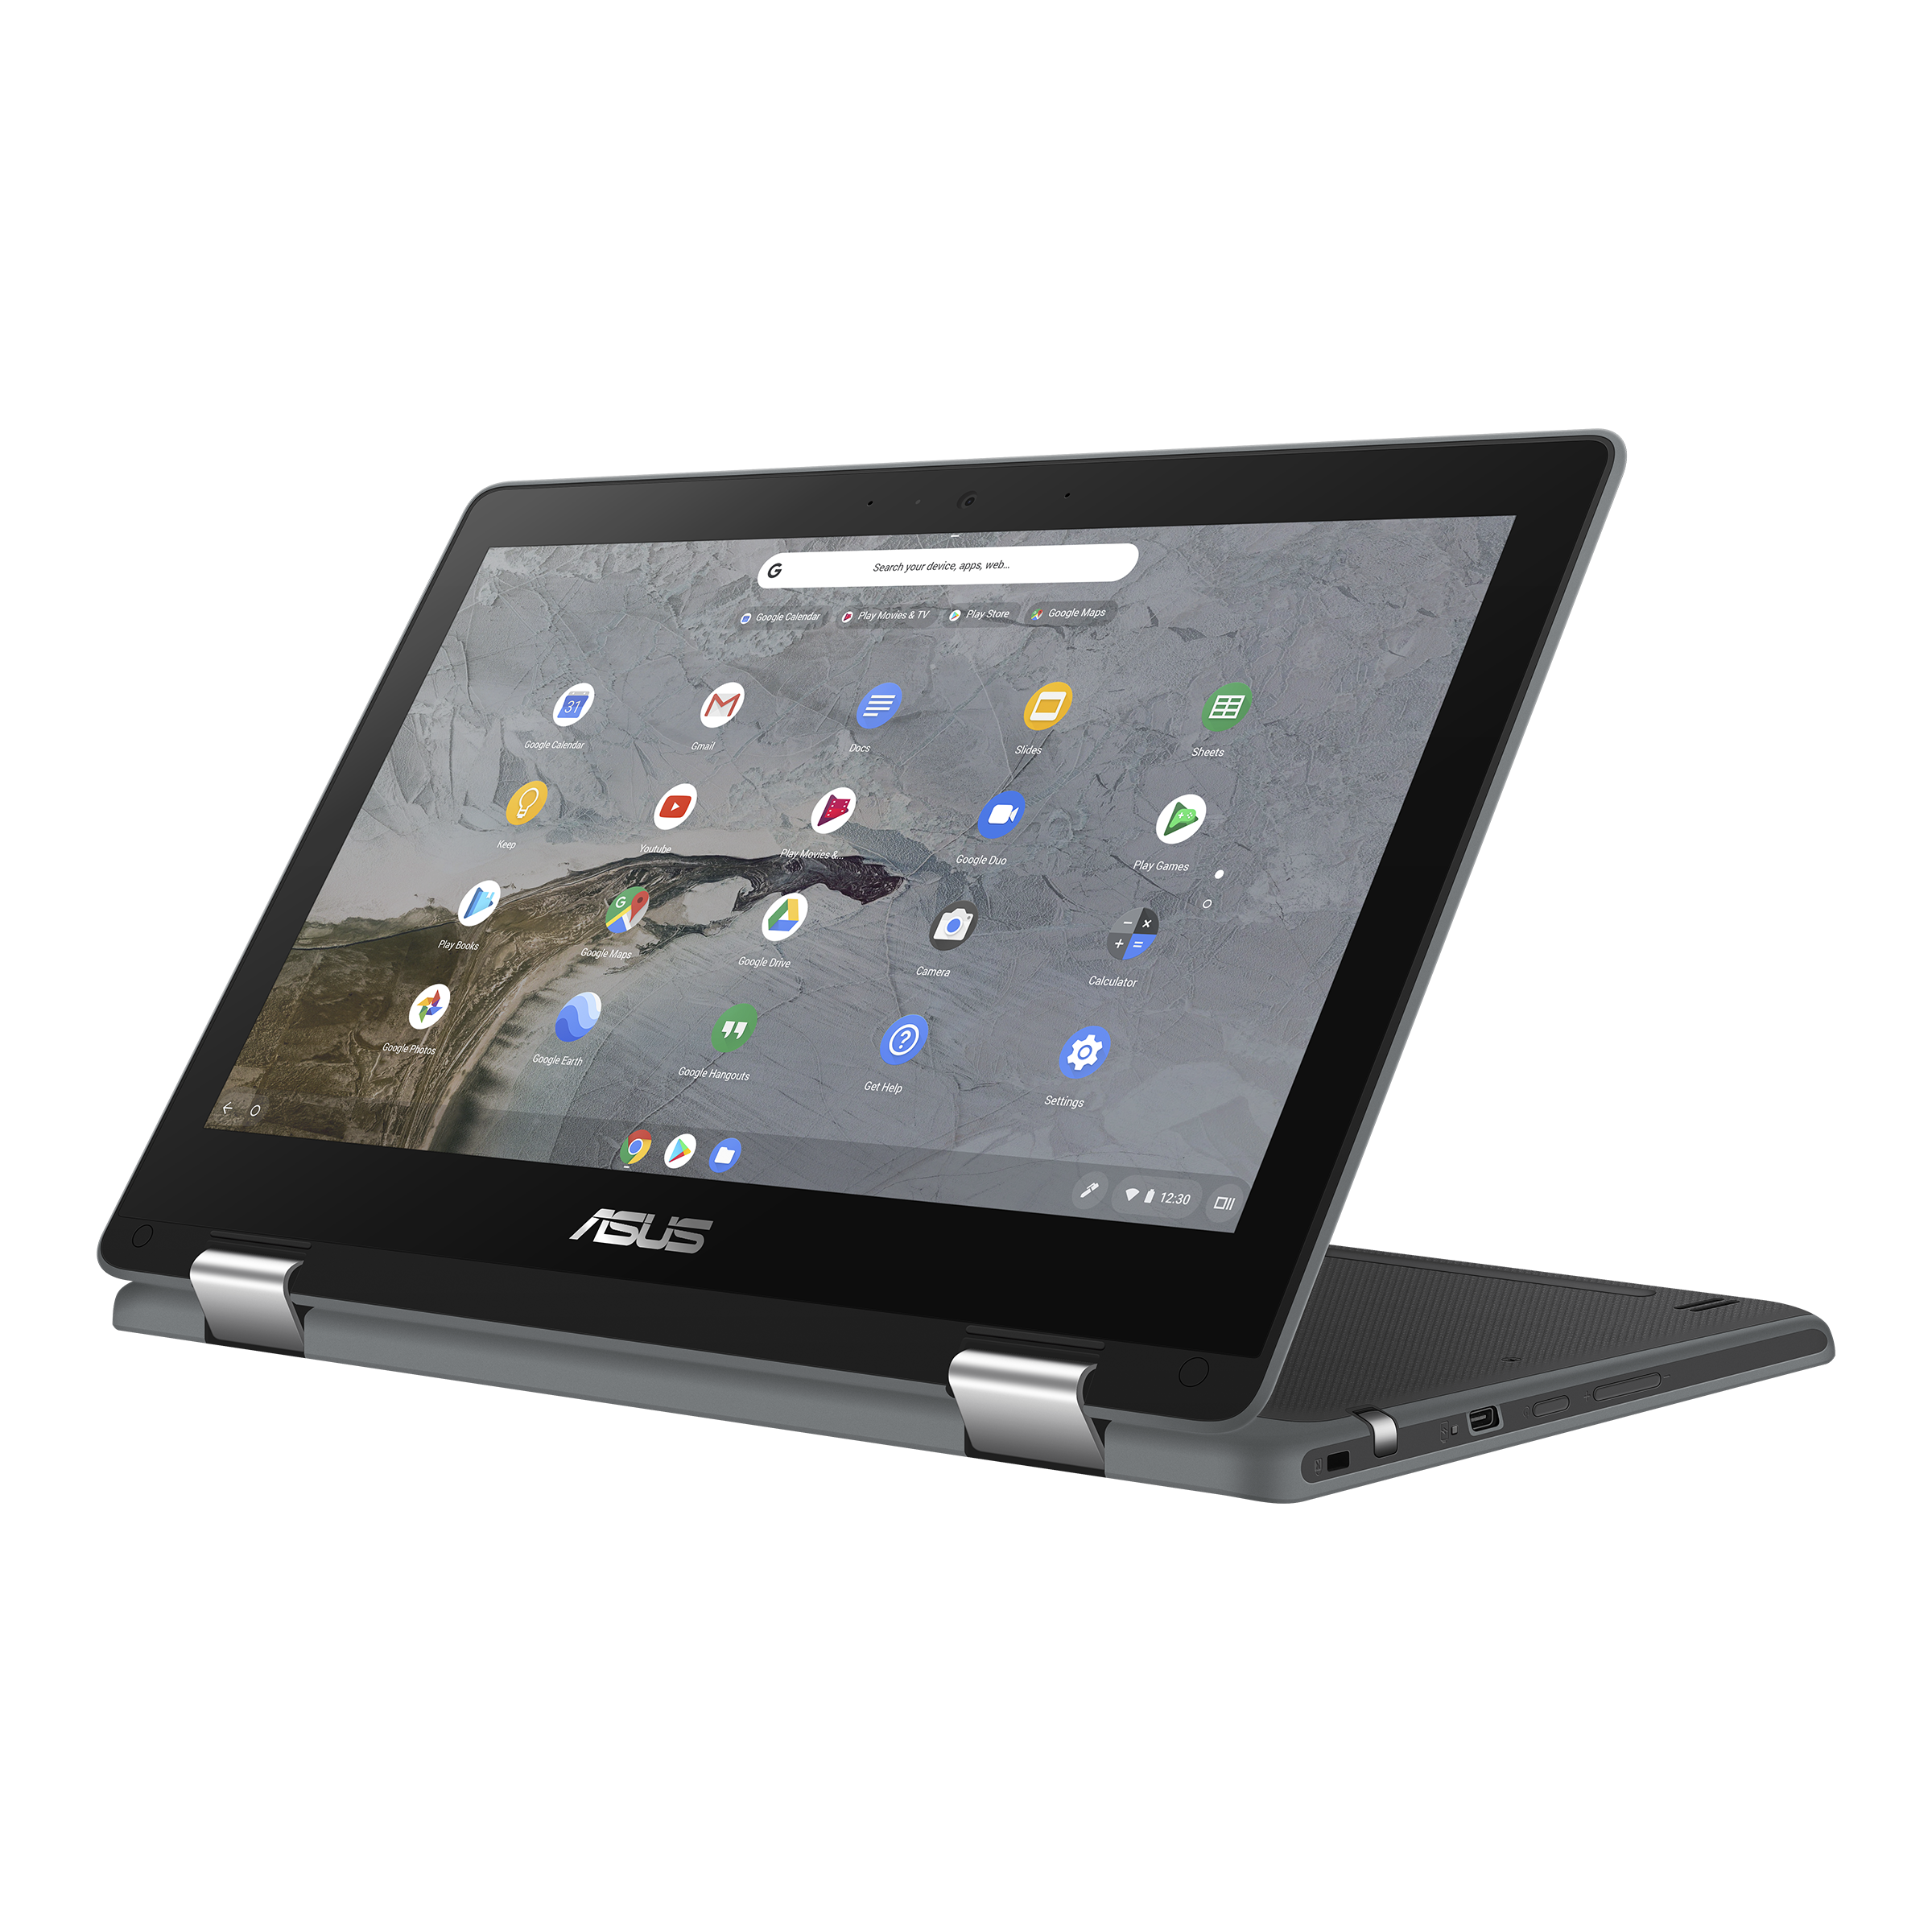 ASUS Chromebook Flip C302｜Laptops For Home｜ASUS Global